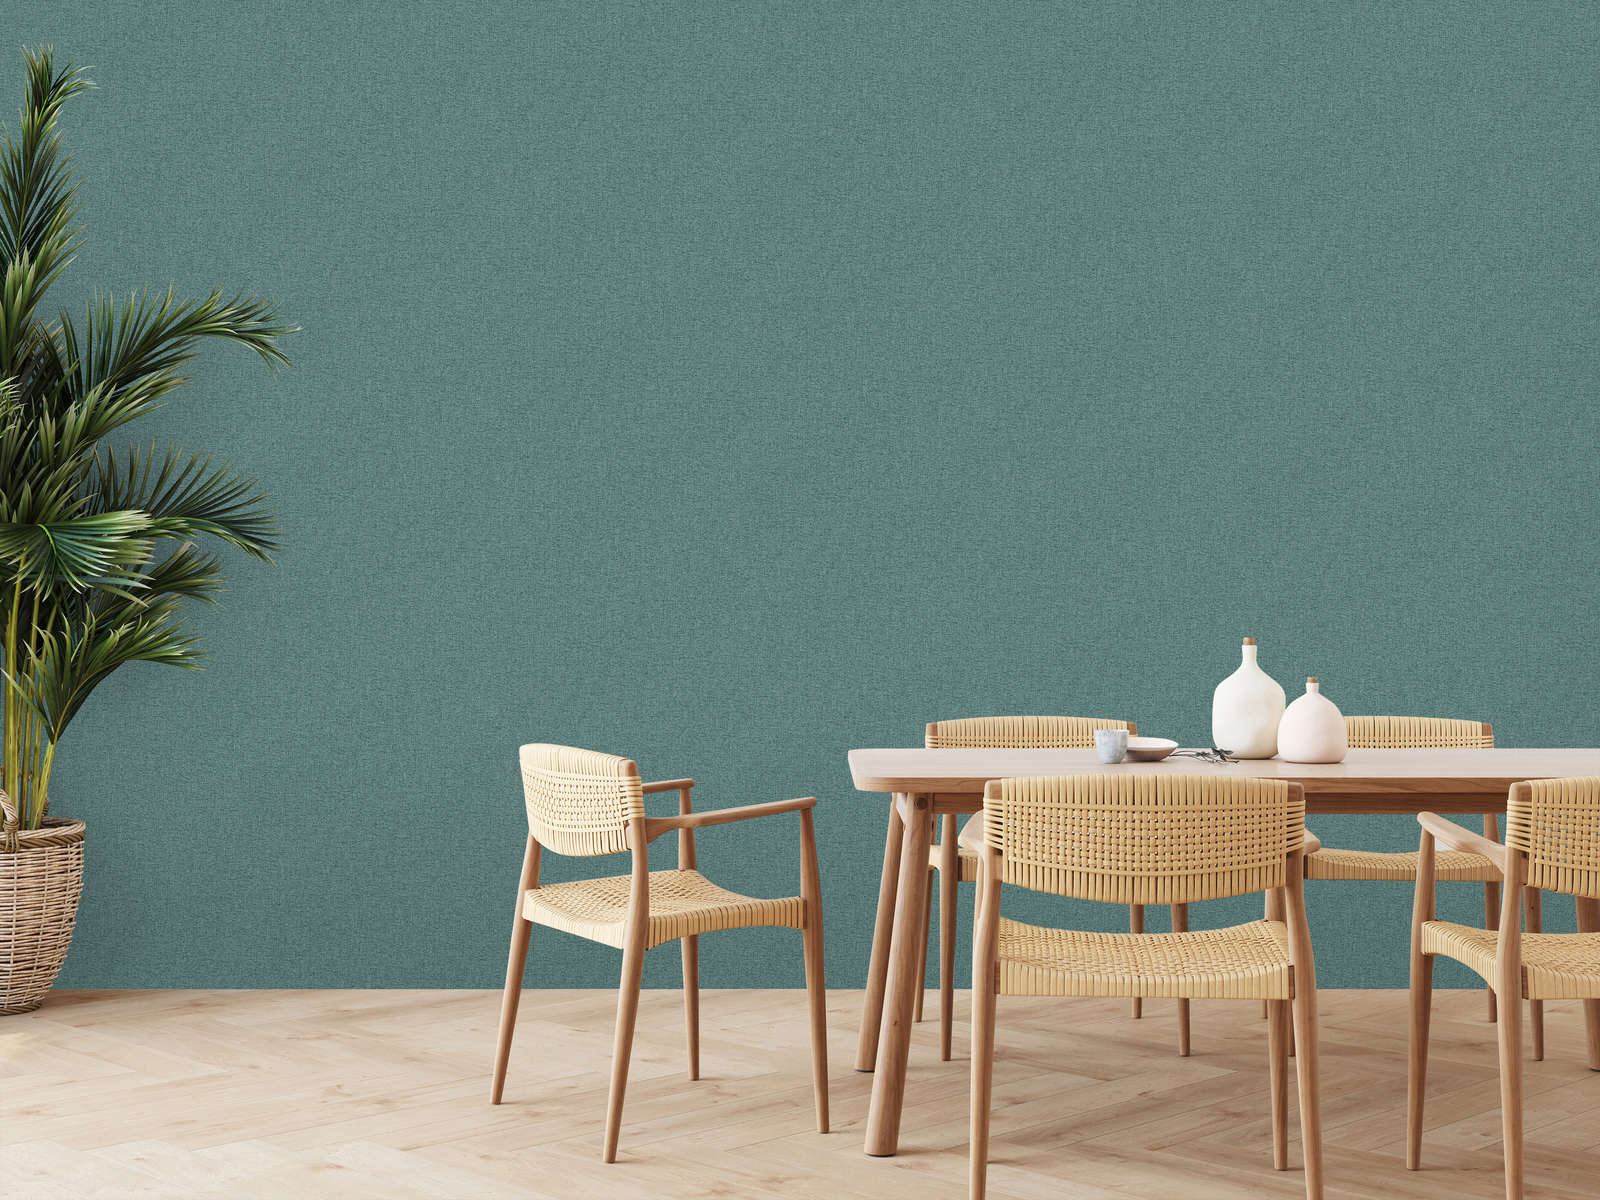             Wallpaper with structure design unicoloured, matt - green, petrol
        